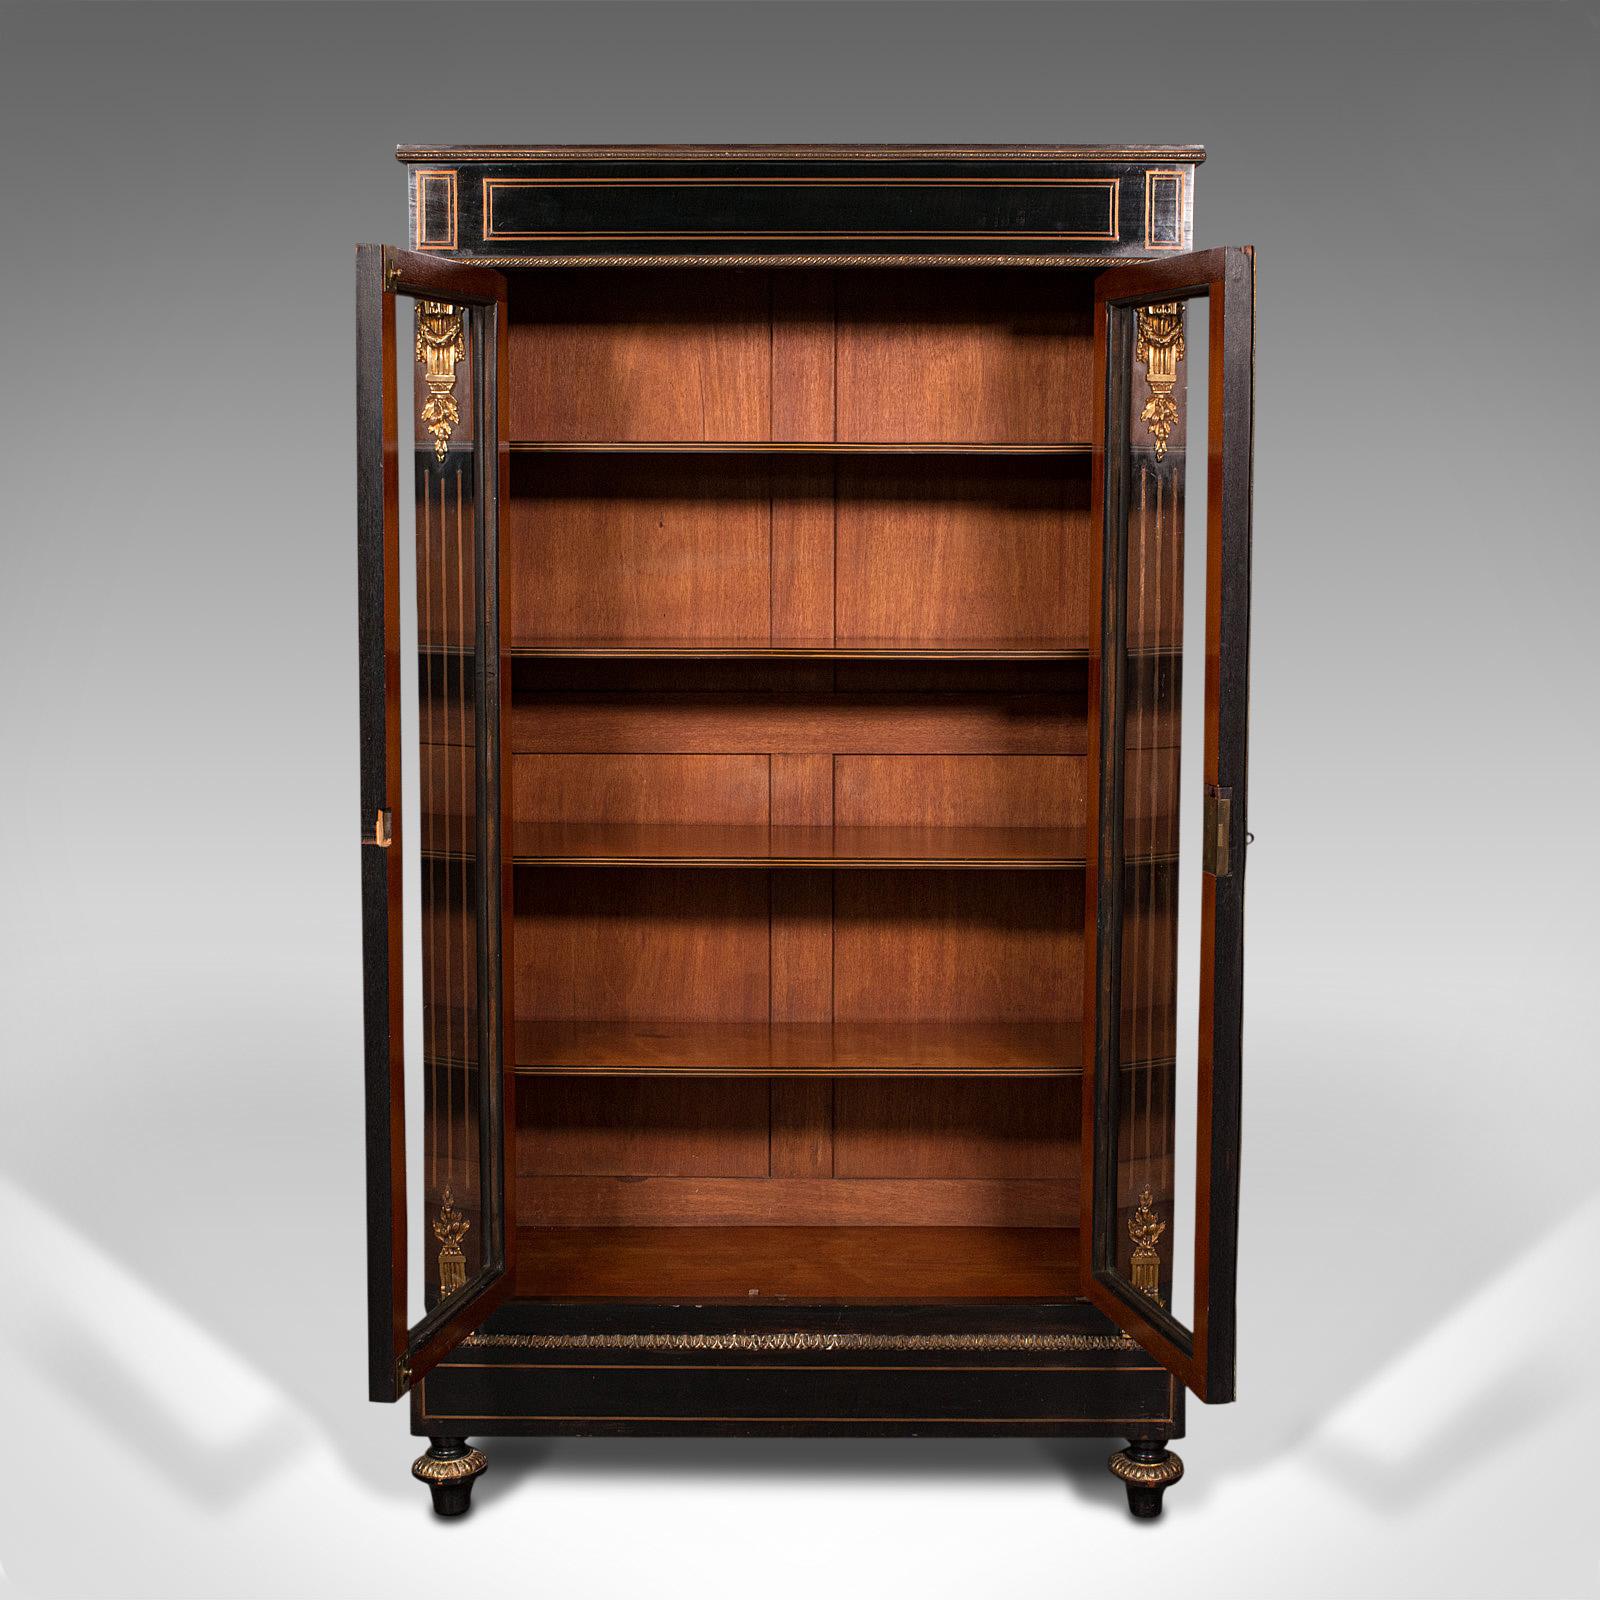 British Tall Antique Vitrine Cabinet, English, Display Case, Bookcase, Regency, C.1830